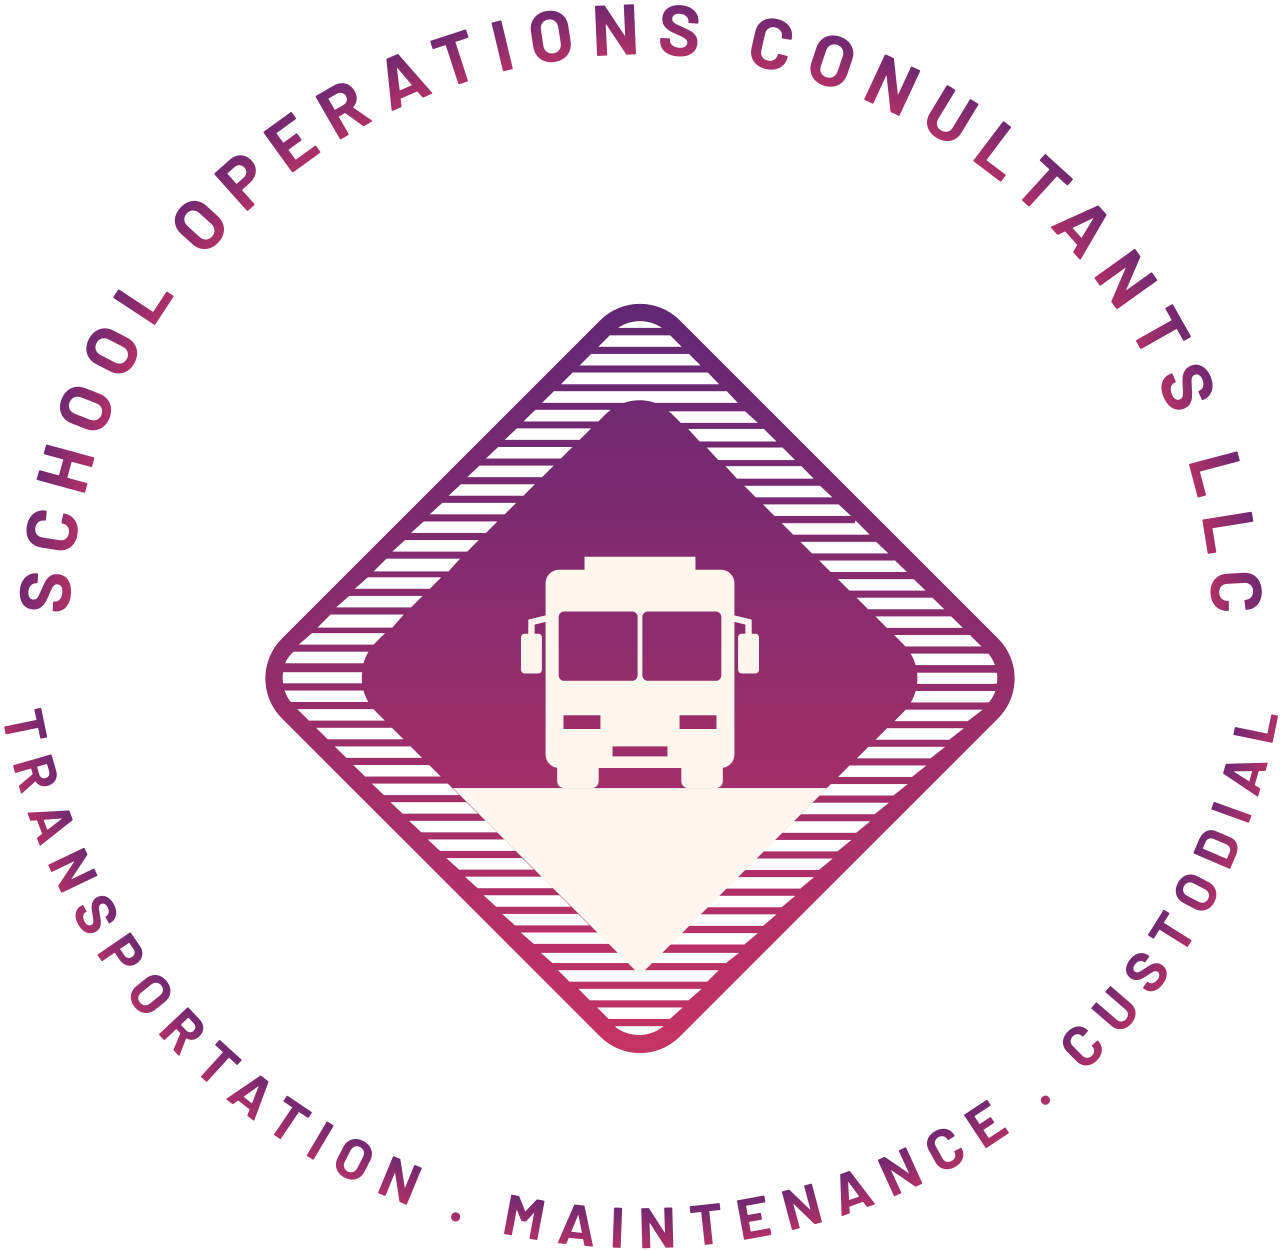 SCHOOL OPERATIONS CONULTANTS LLC's logo